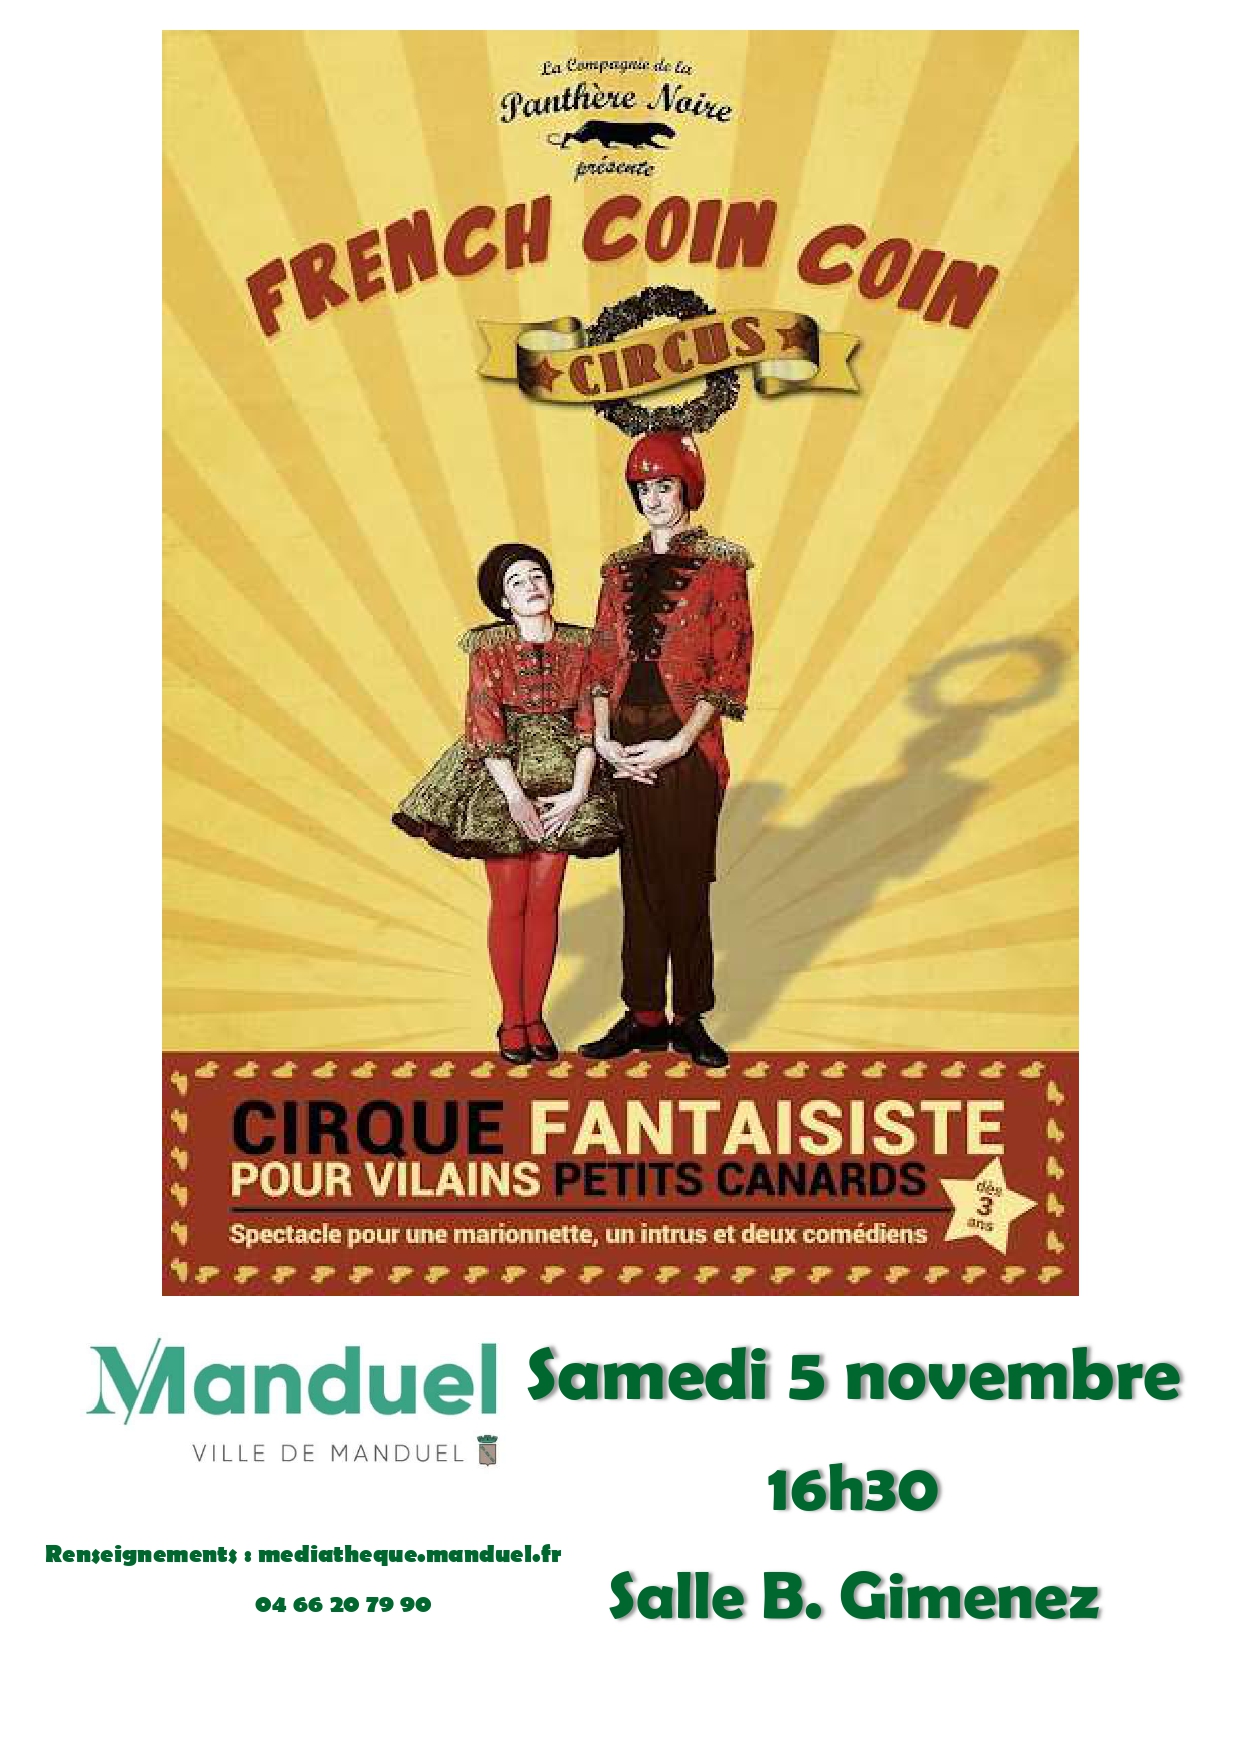 Affiche french coin coin circus 05 novembre 2022